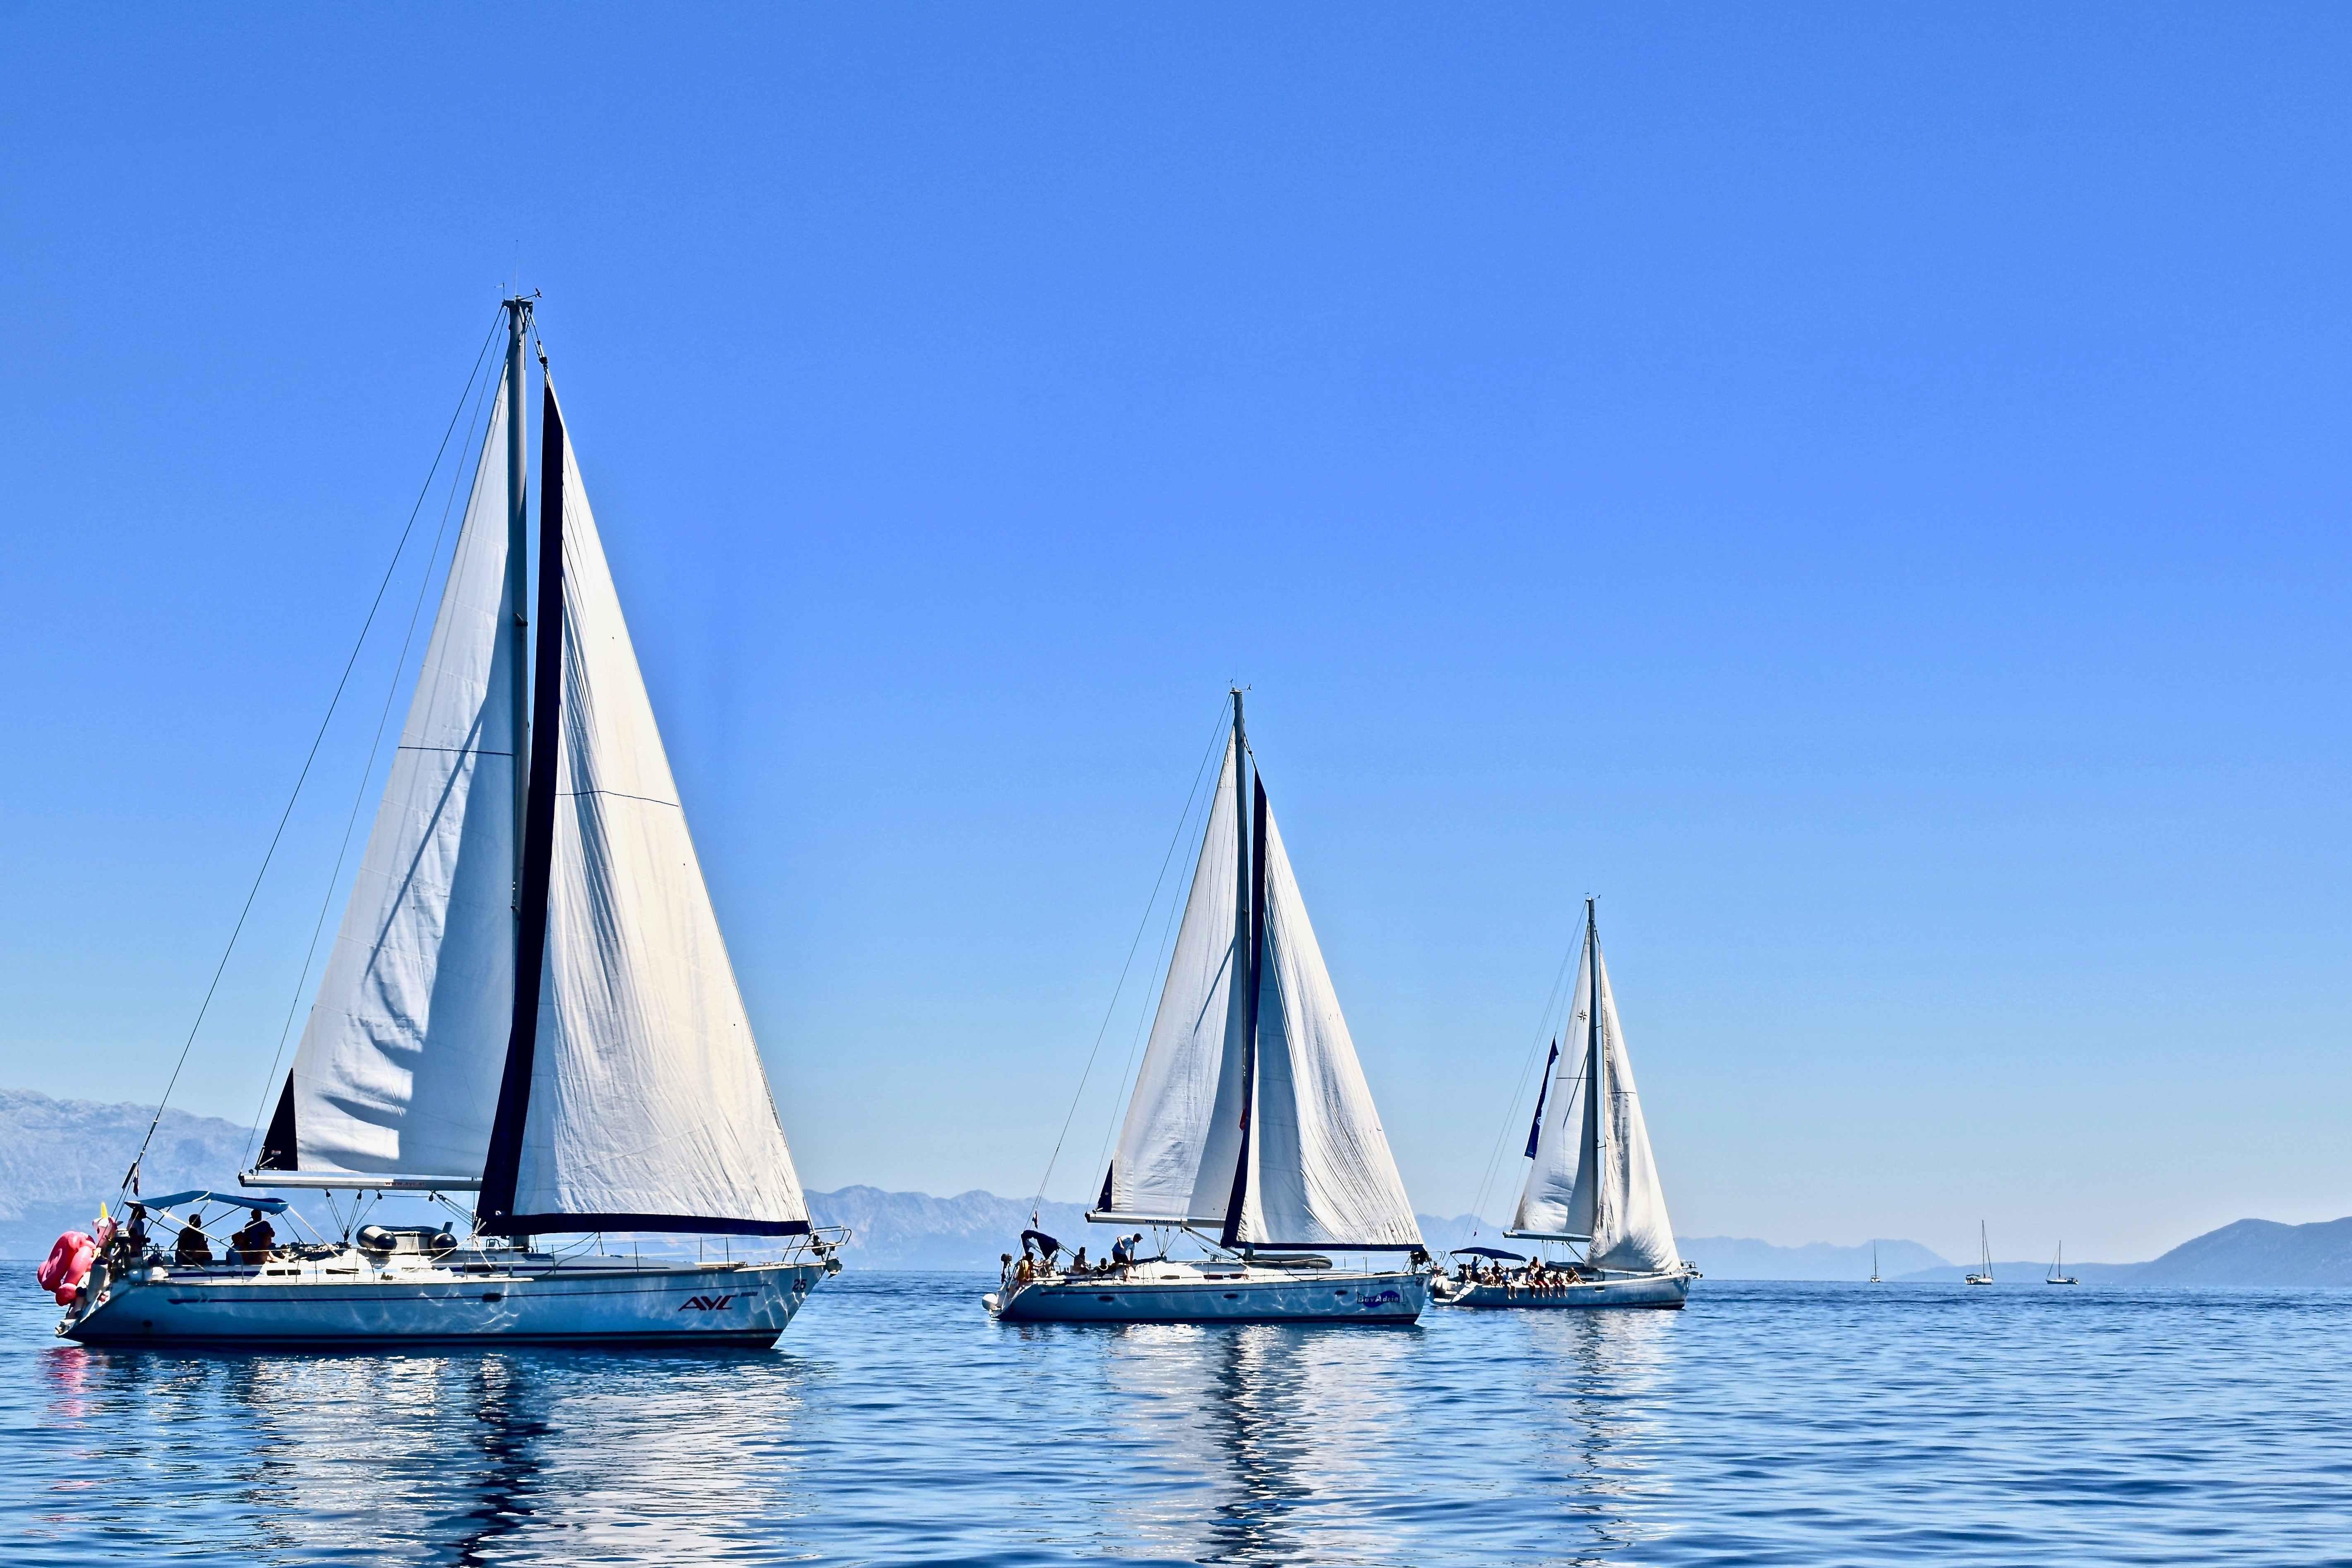 sailboat images